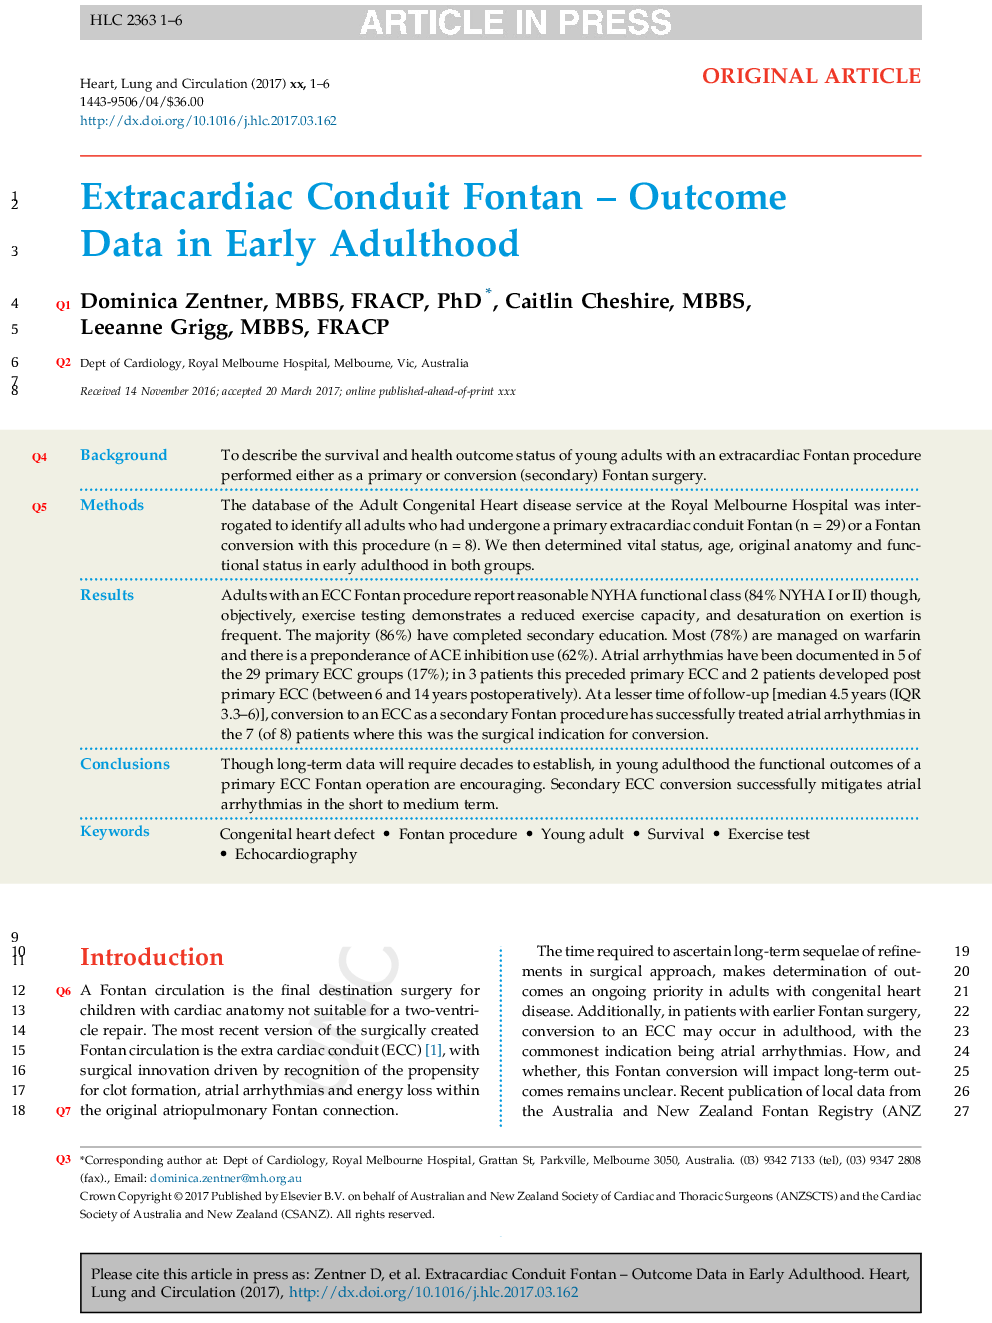 Extracardiac Conduit Fontan - Outcome Data in Early Adulthood